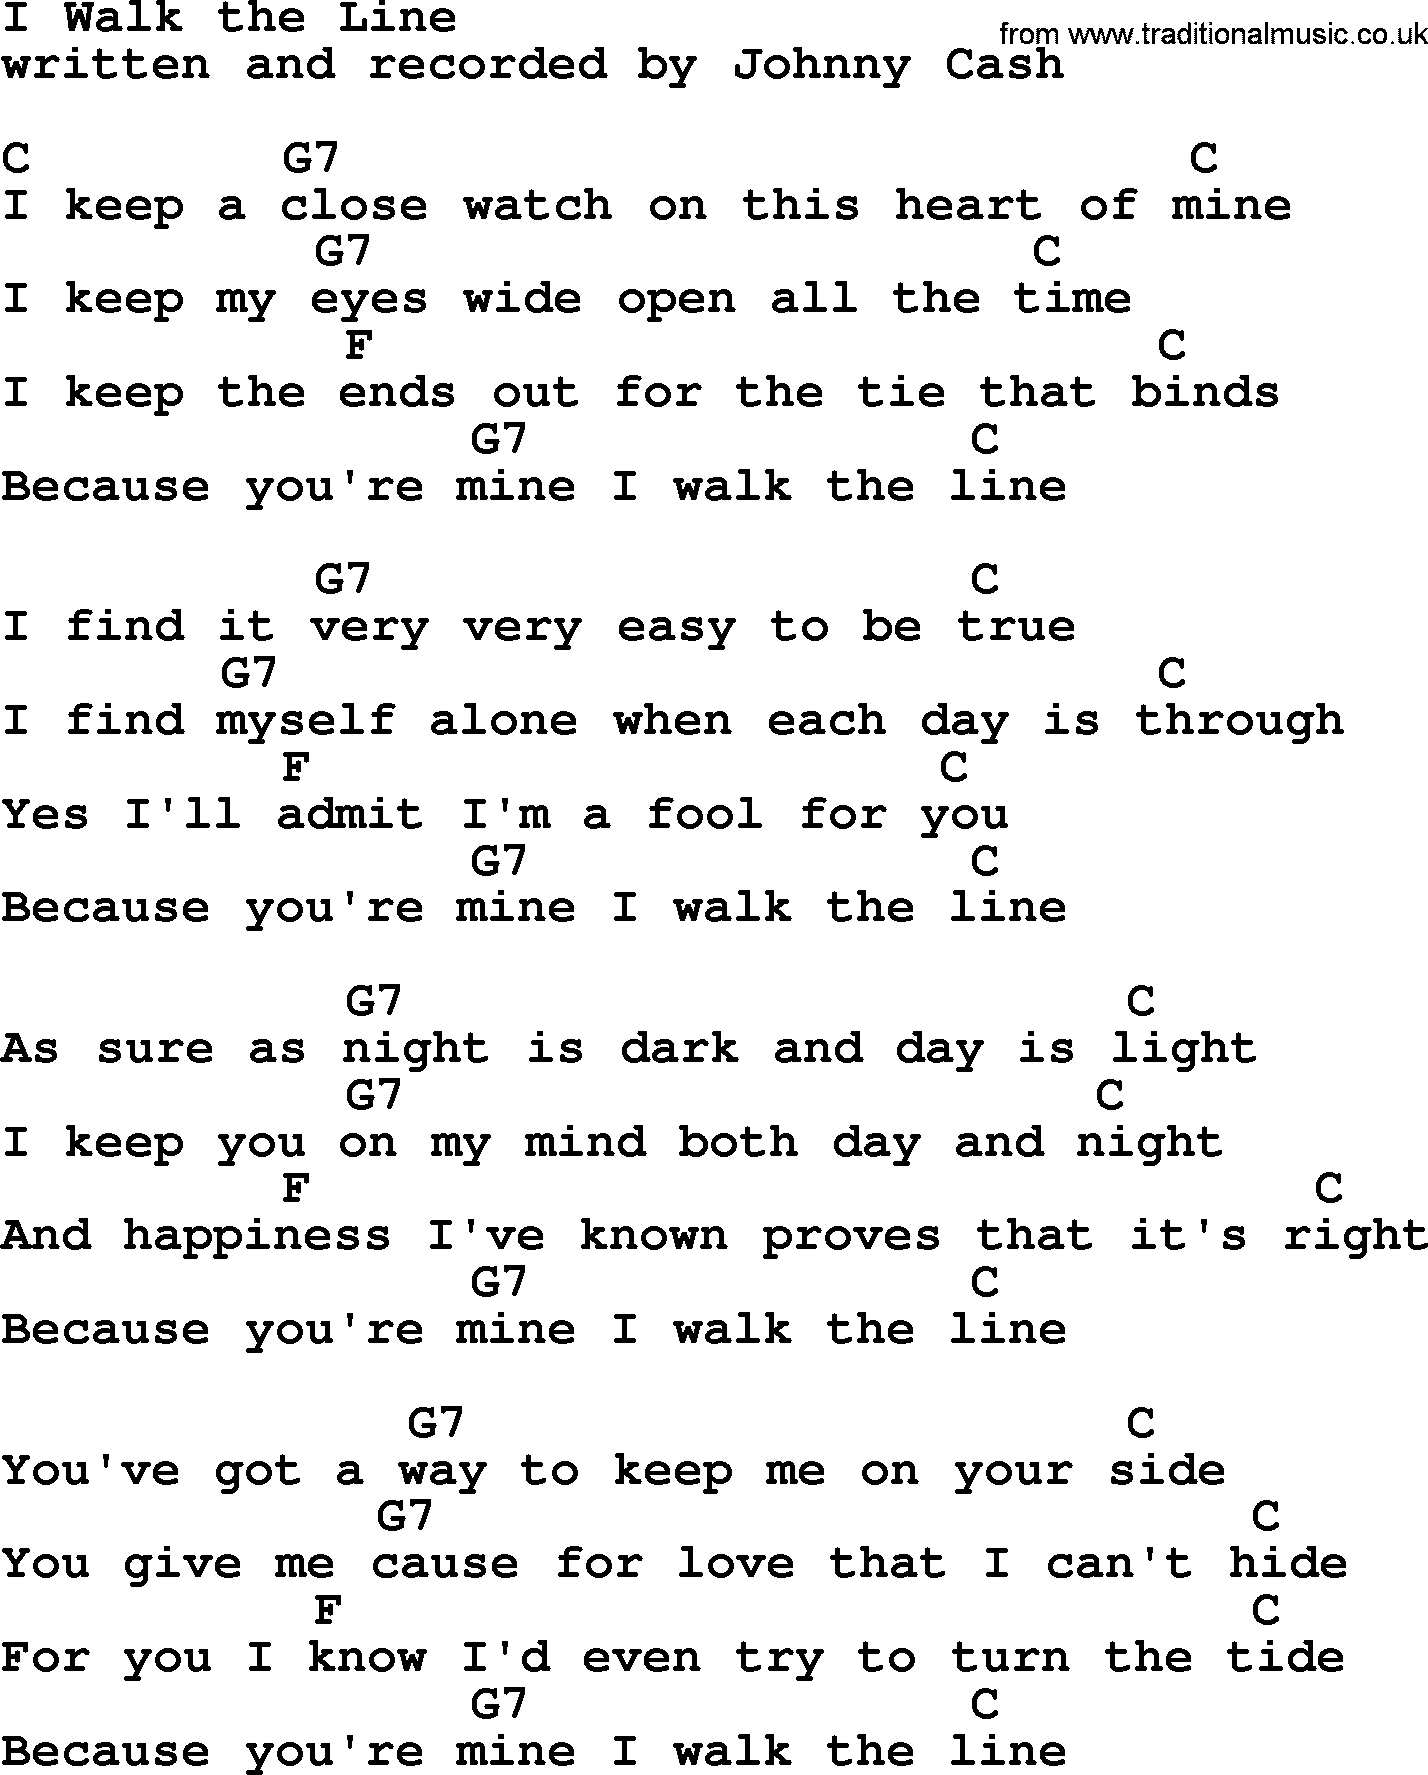 Johnny Cash song I Walk The Line, lyrics and chords